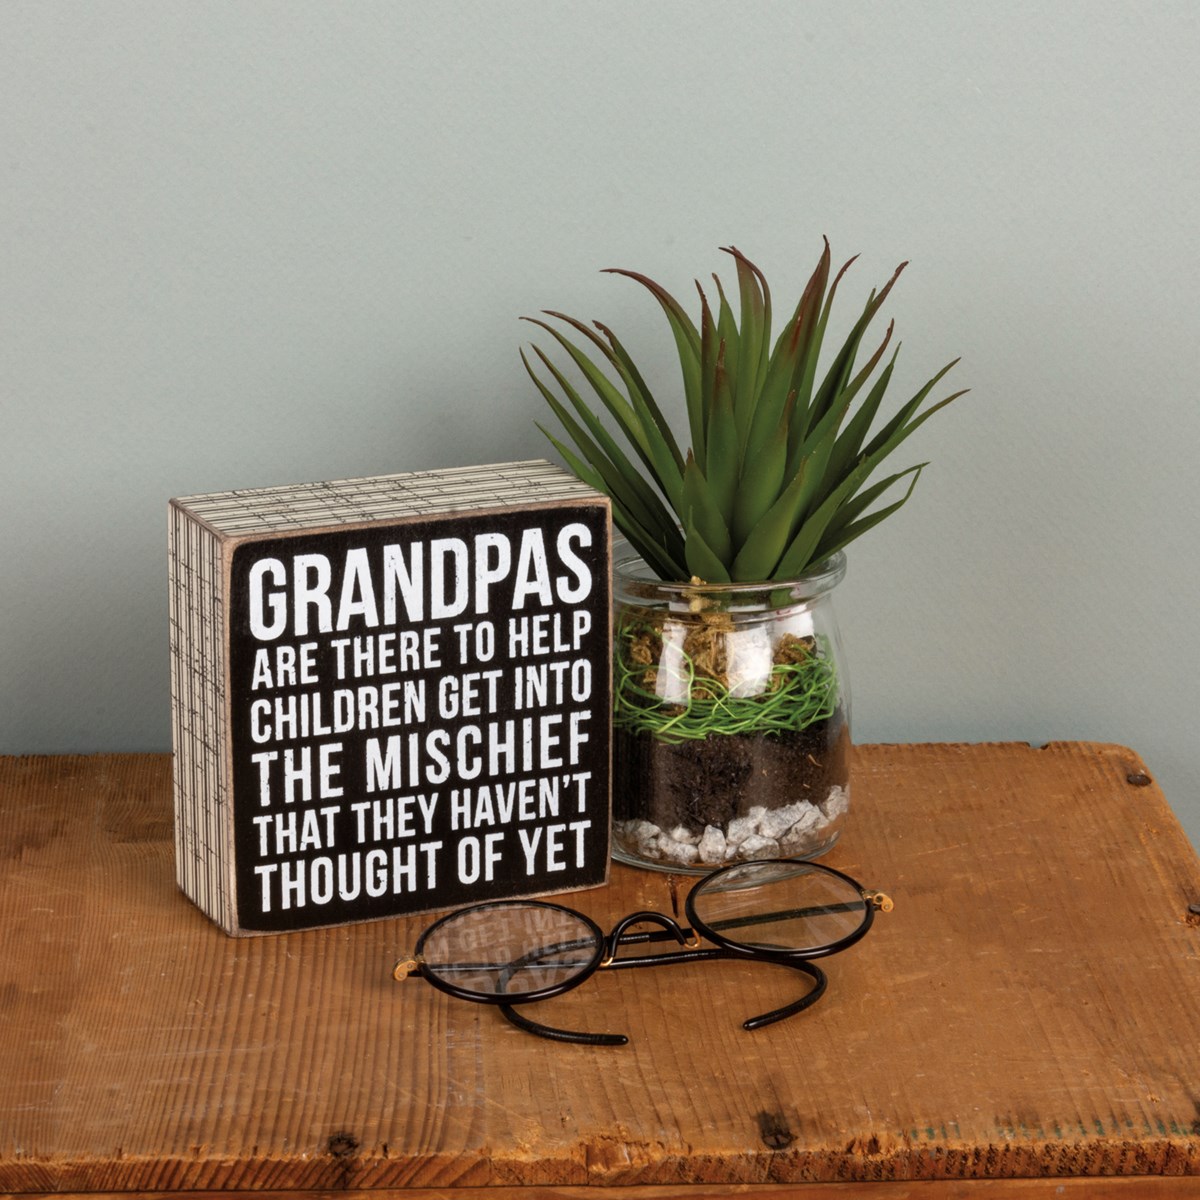 Grandpas Box Sign - Wood